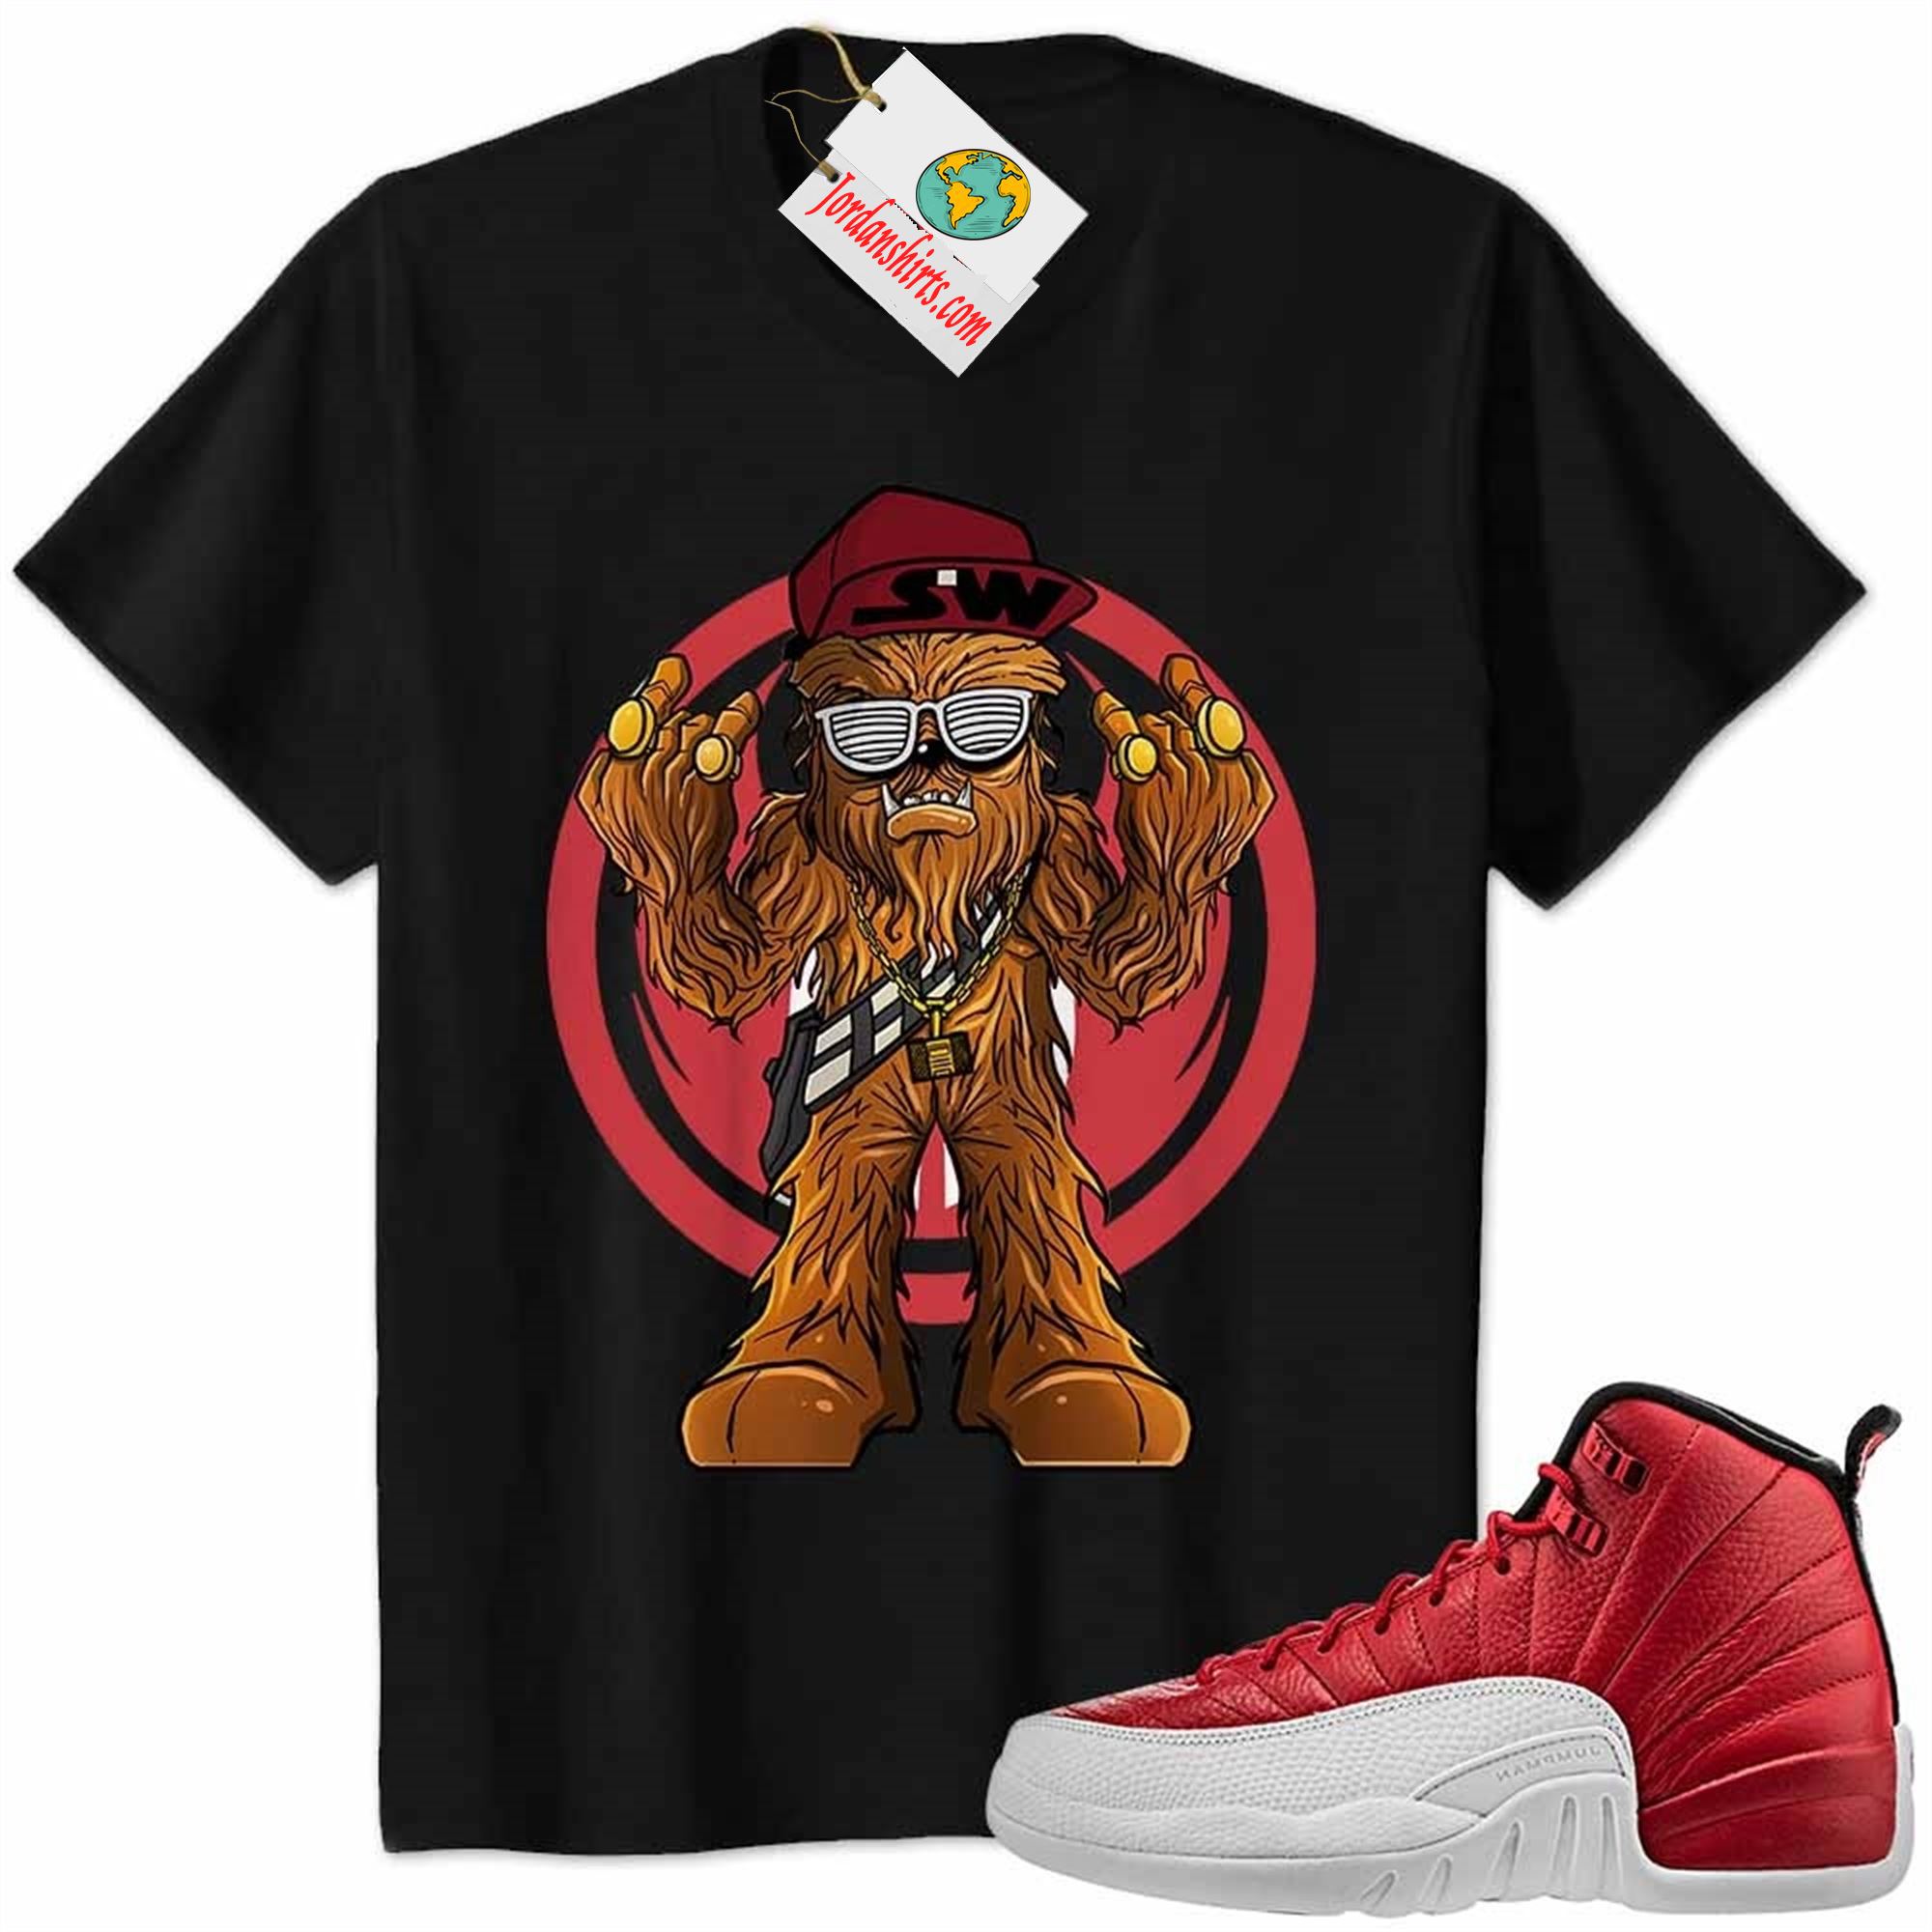 Jordan 12 Shirt, Gangster Chewbacca Stars War Black Air Jordan 12 Gym Red 12s Size Up To 5xl